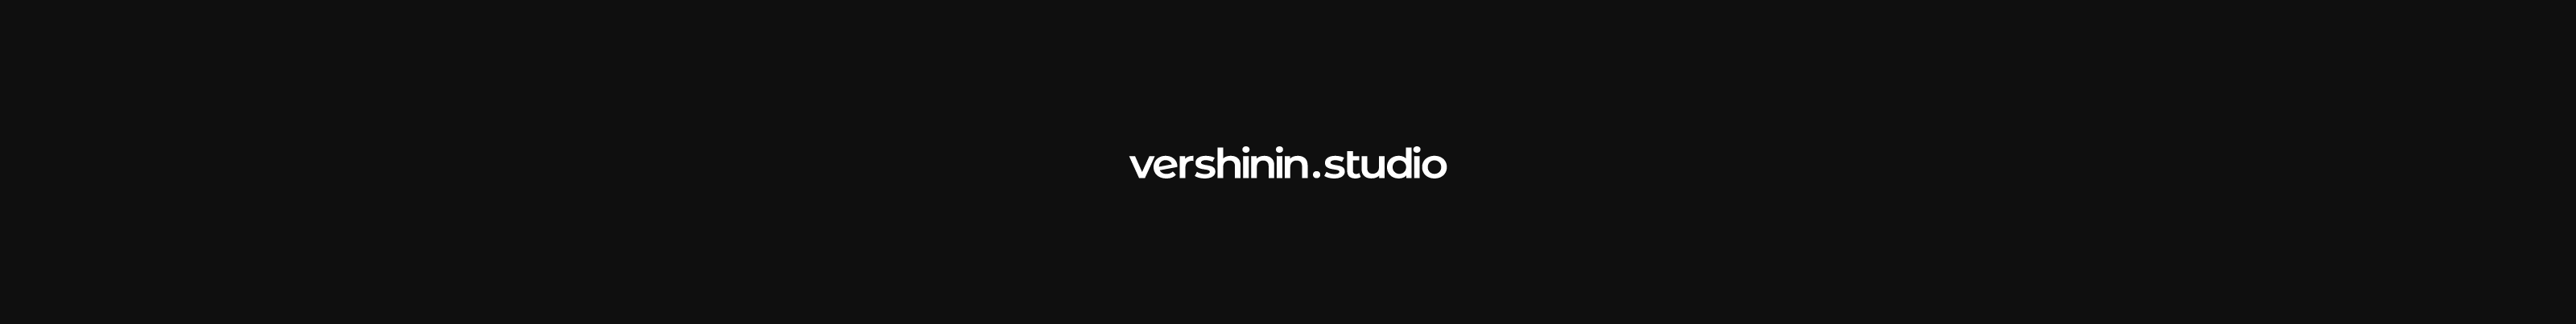 vershinin studio's profile banner